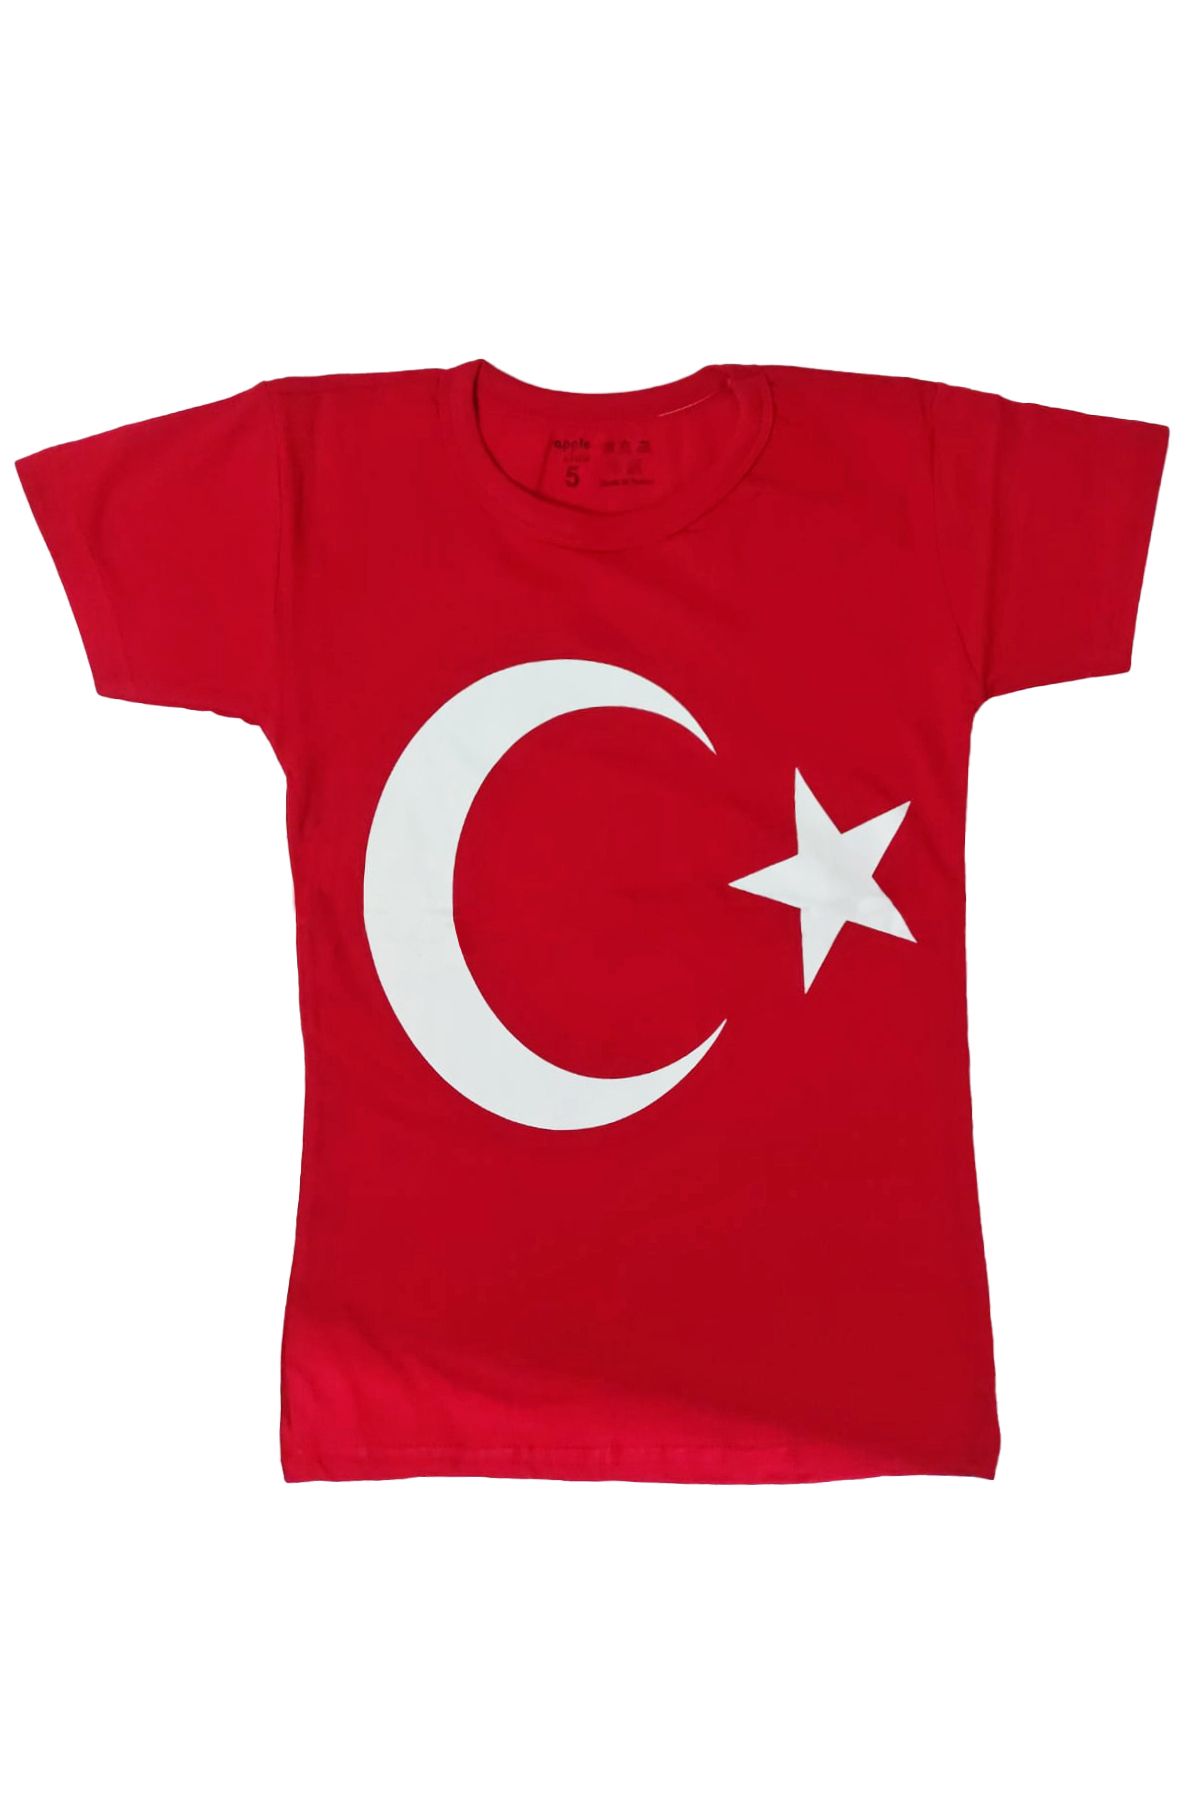 Limmy Türk Bayraklı Tişört Pamuklu Kırmızı Ay Yıldız Çocuk Tshirt- 7 Yaş